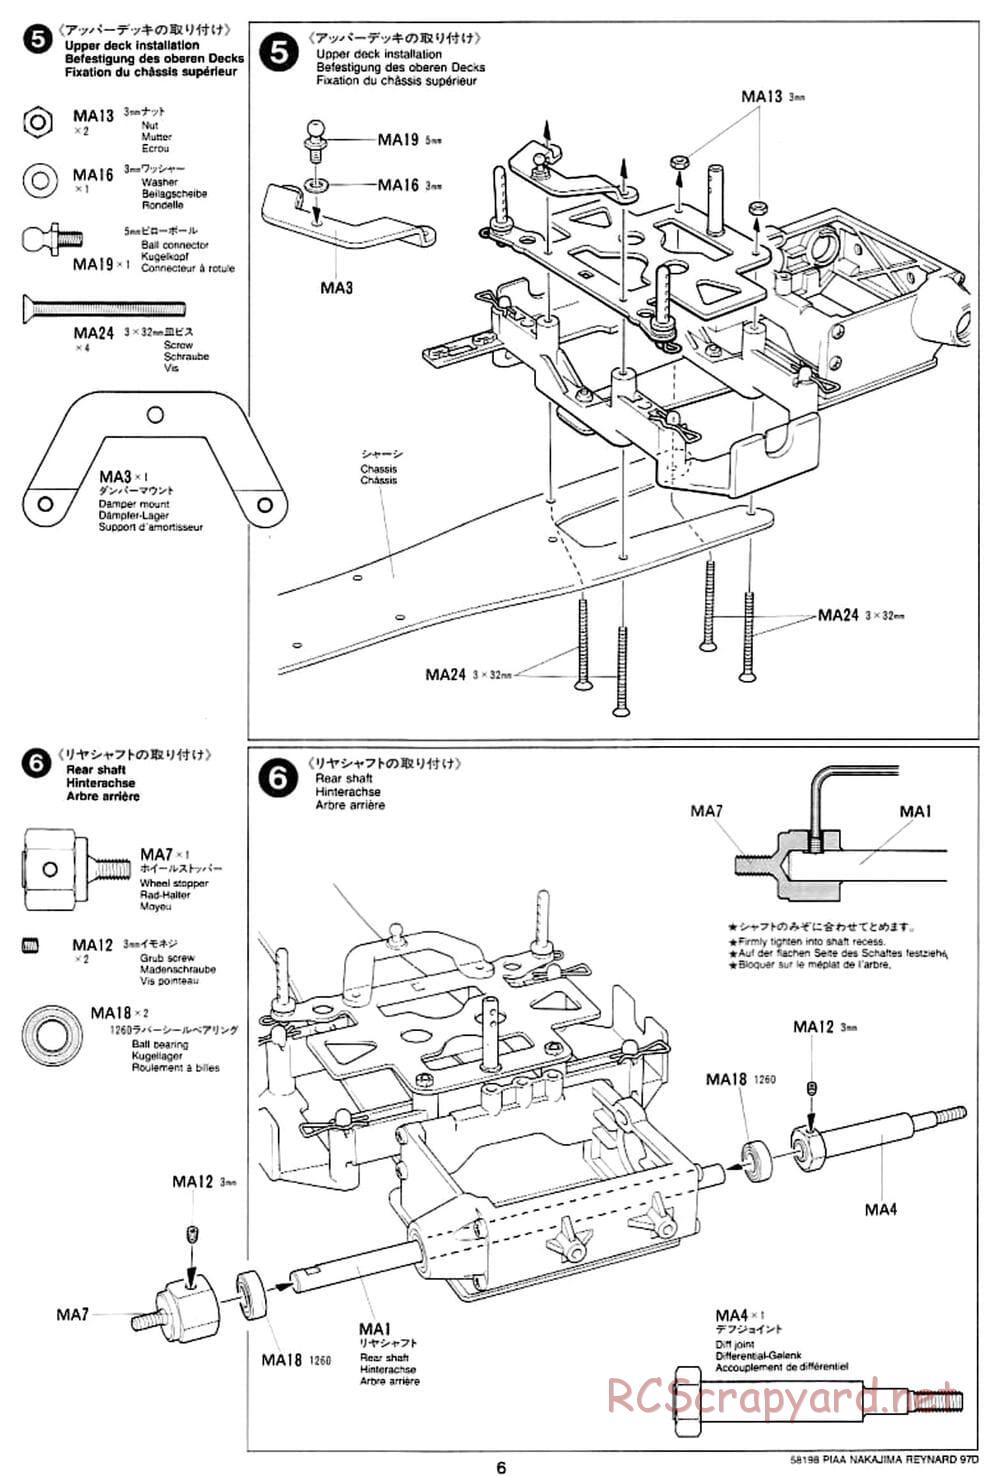 Tamiya - PIAA Nakajima Reynard 97D - F103 Chassis - Manual - Page 6